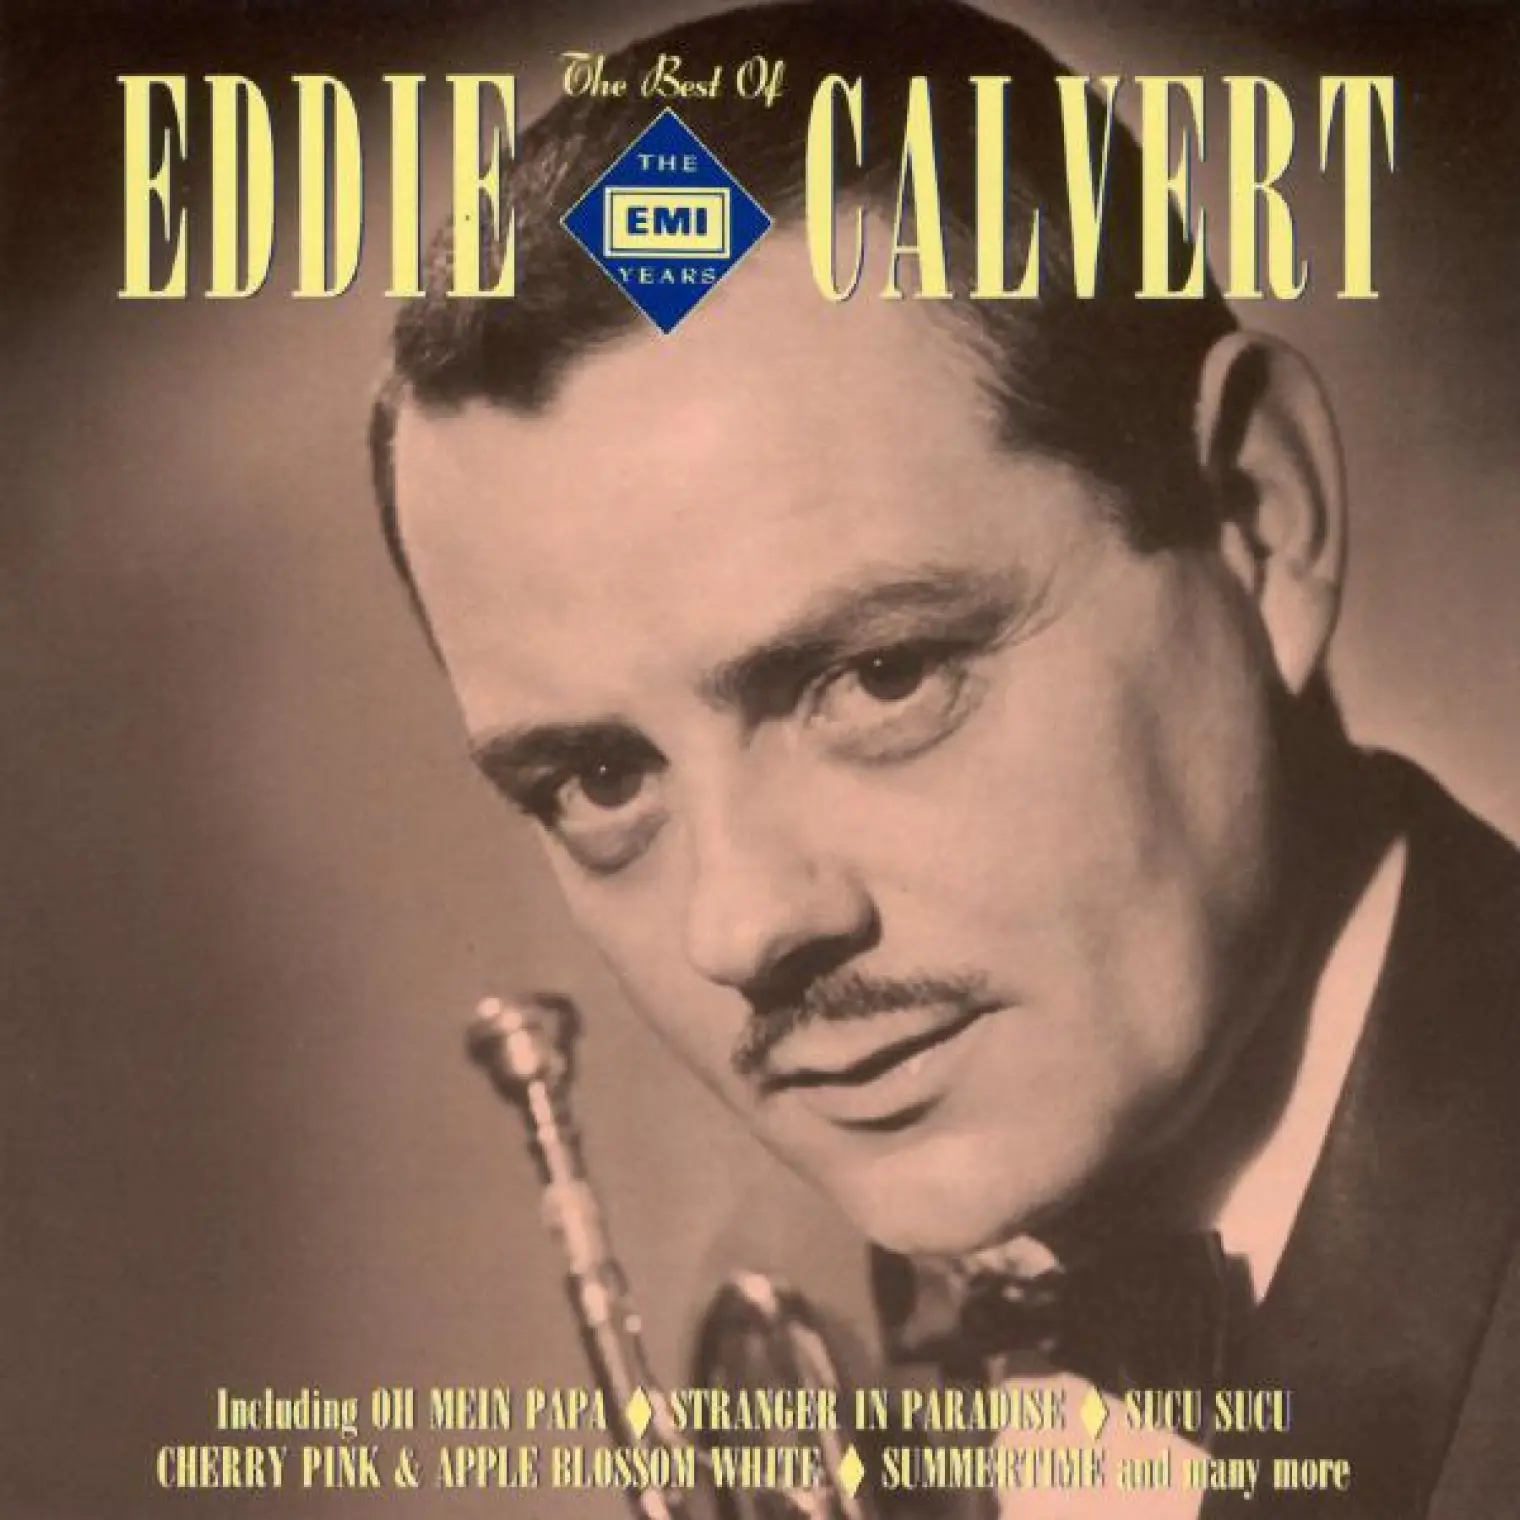 The EMI Years (The Best Of) -  Eddie Calvert 